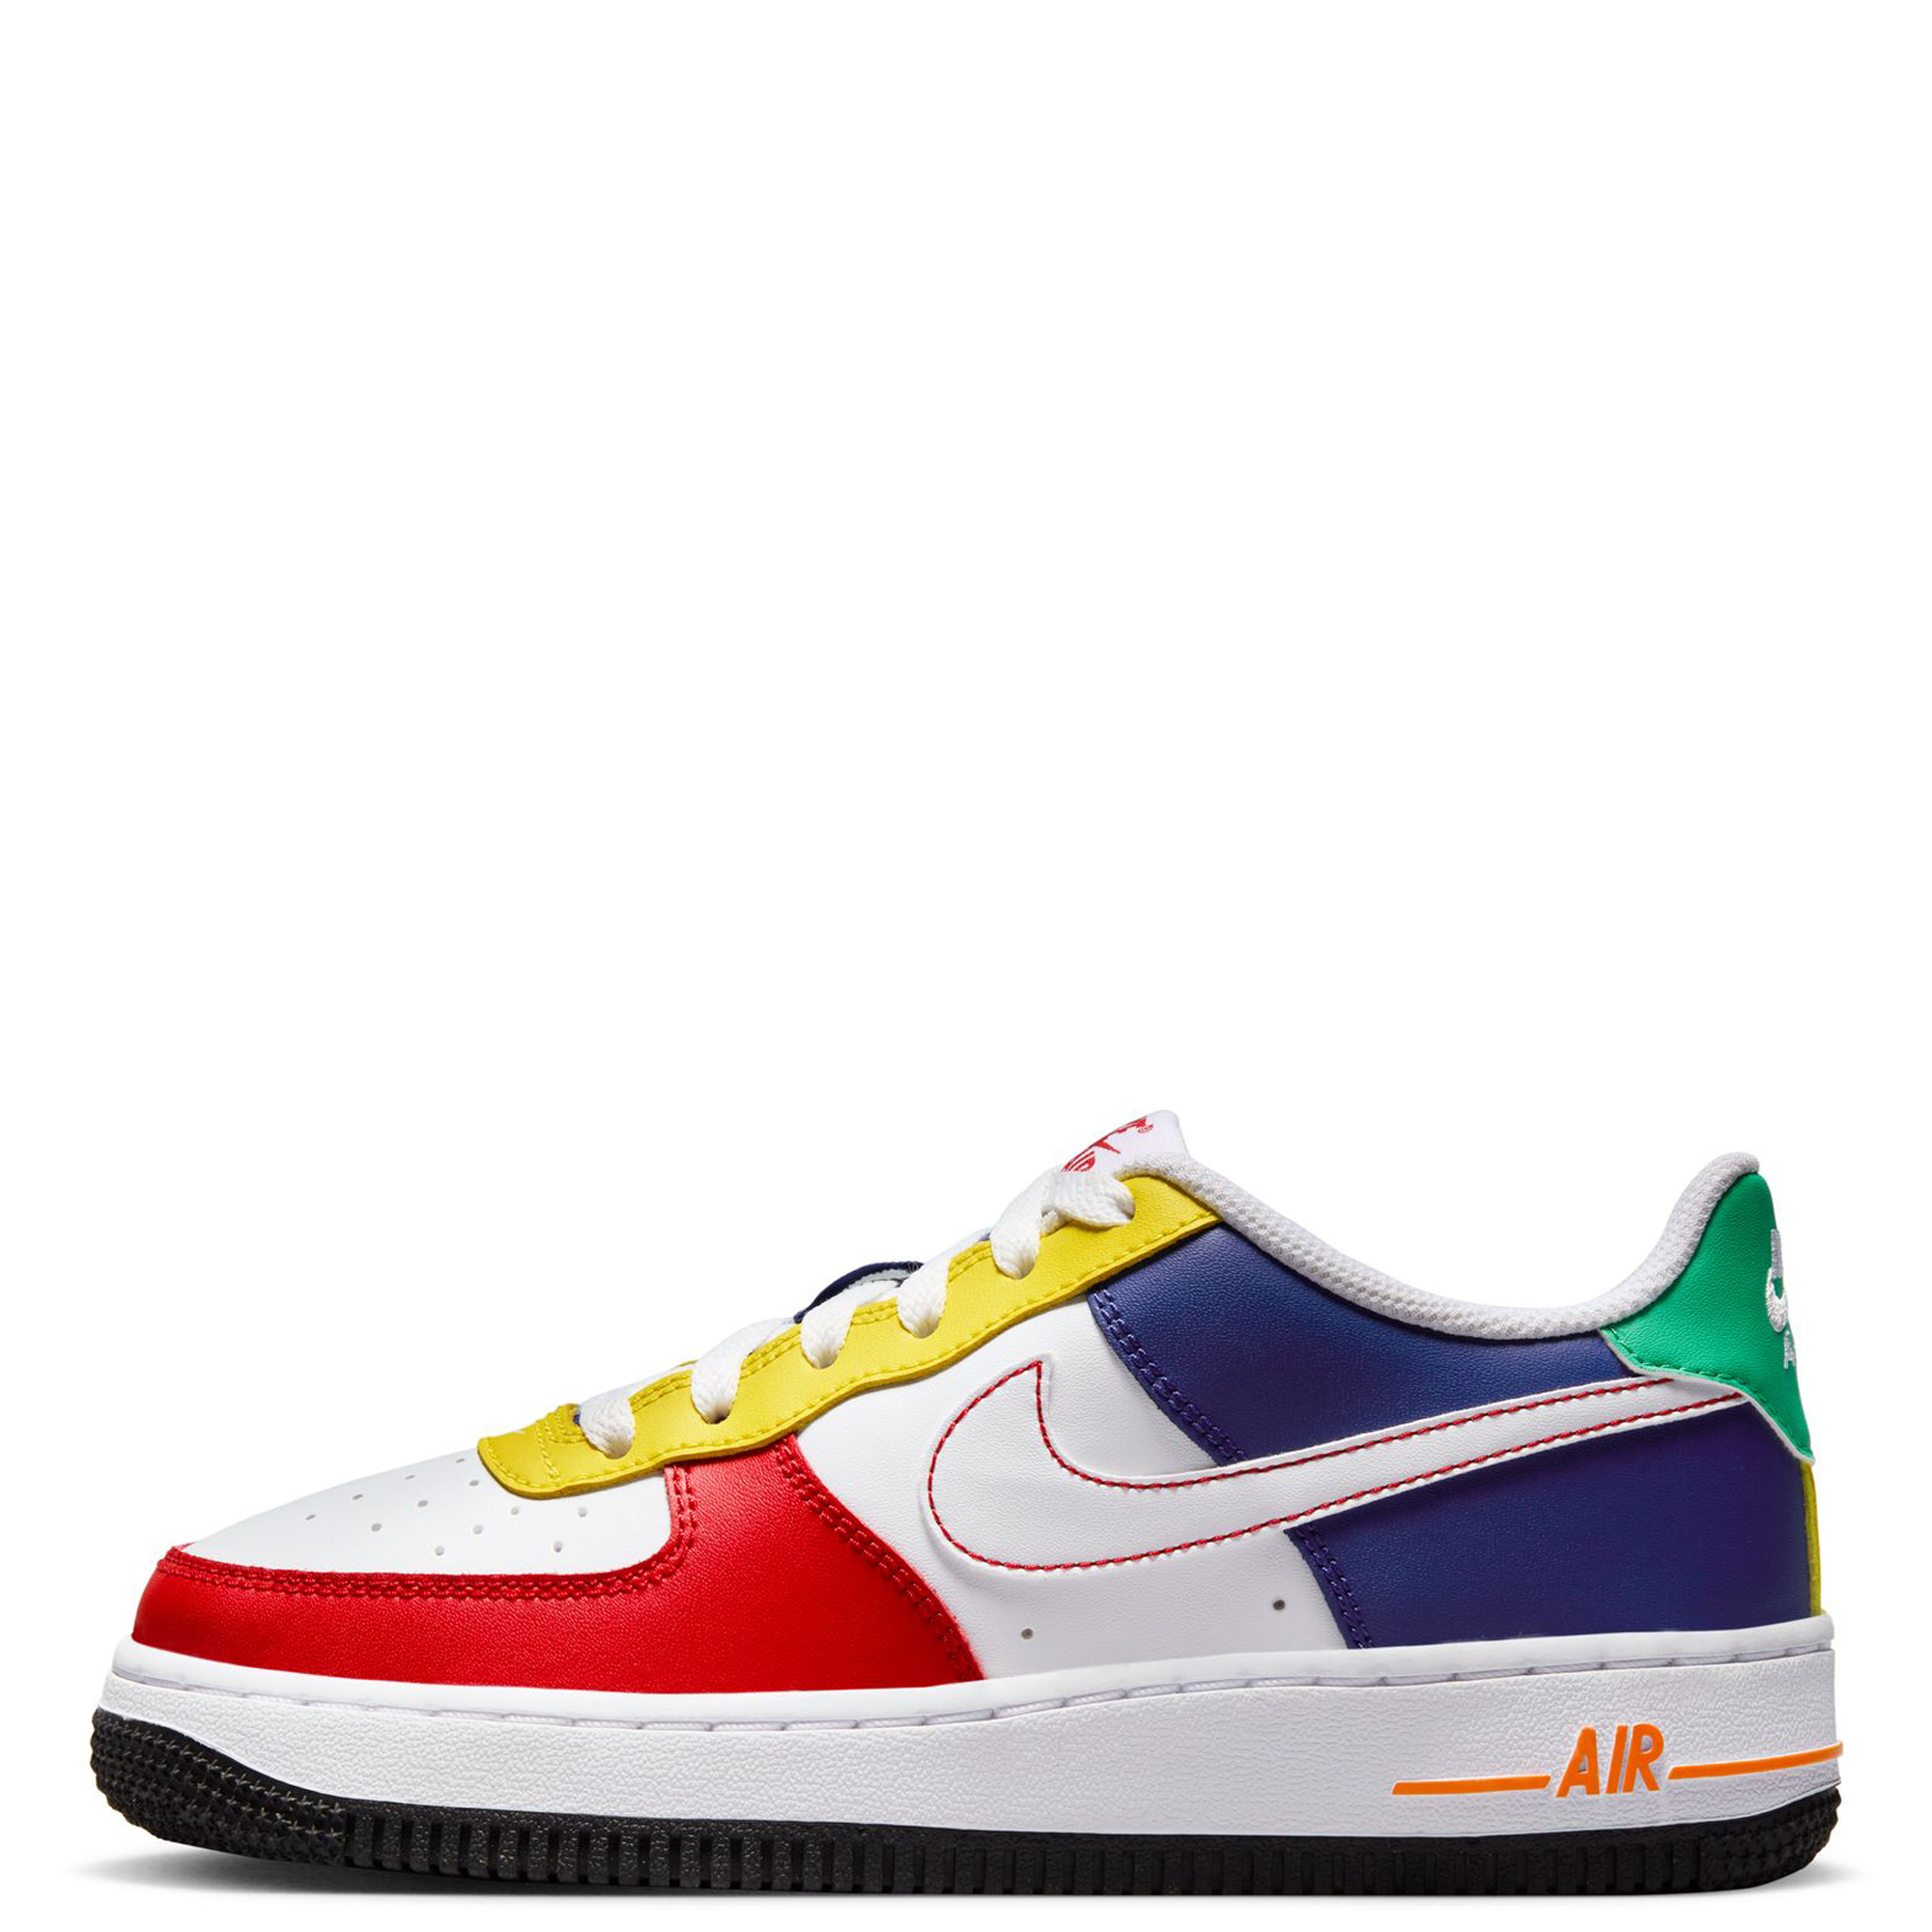  Nike Kids Air Force 1 Lv8 GS Basketball Shoe (3.5)  Black/Multicolor